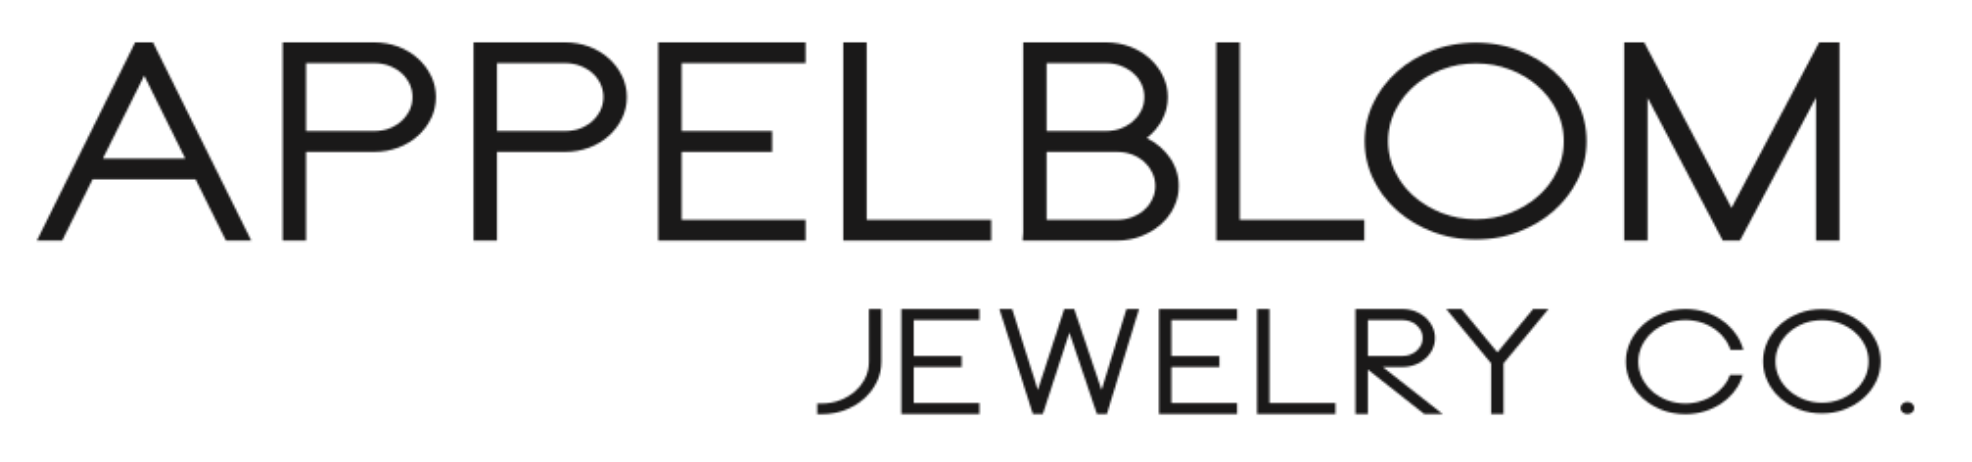 Appelblom Jewelry Co.